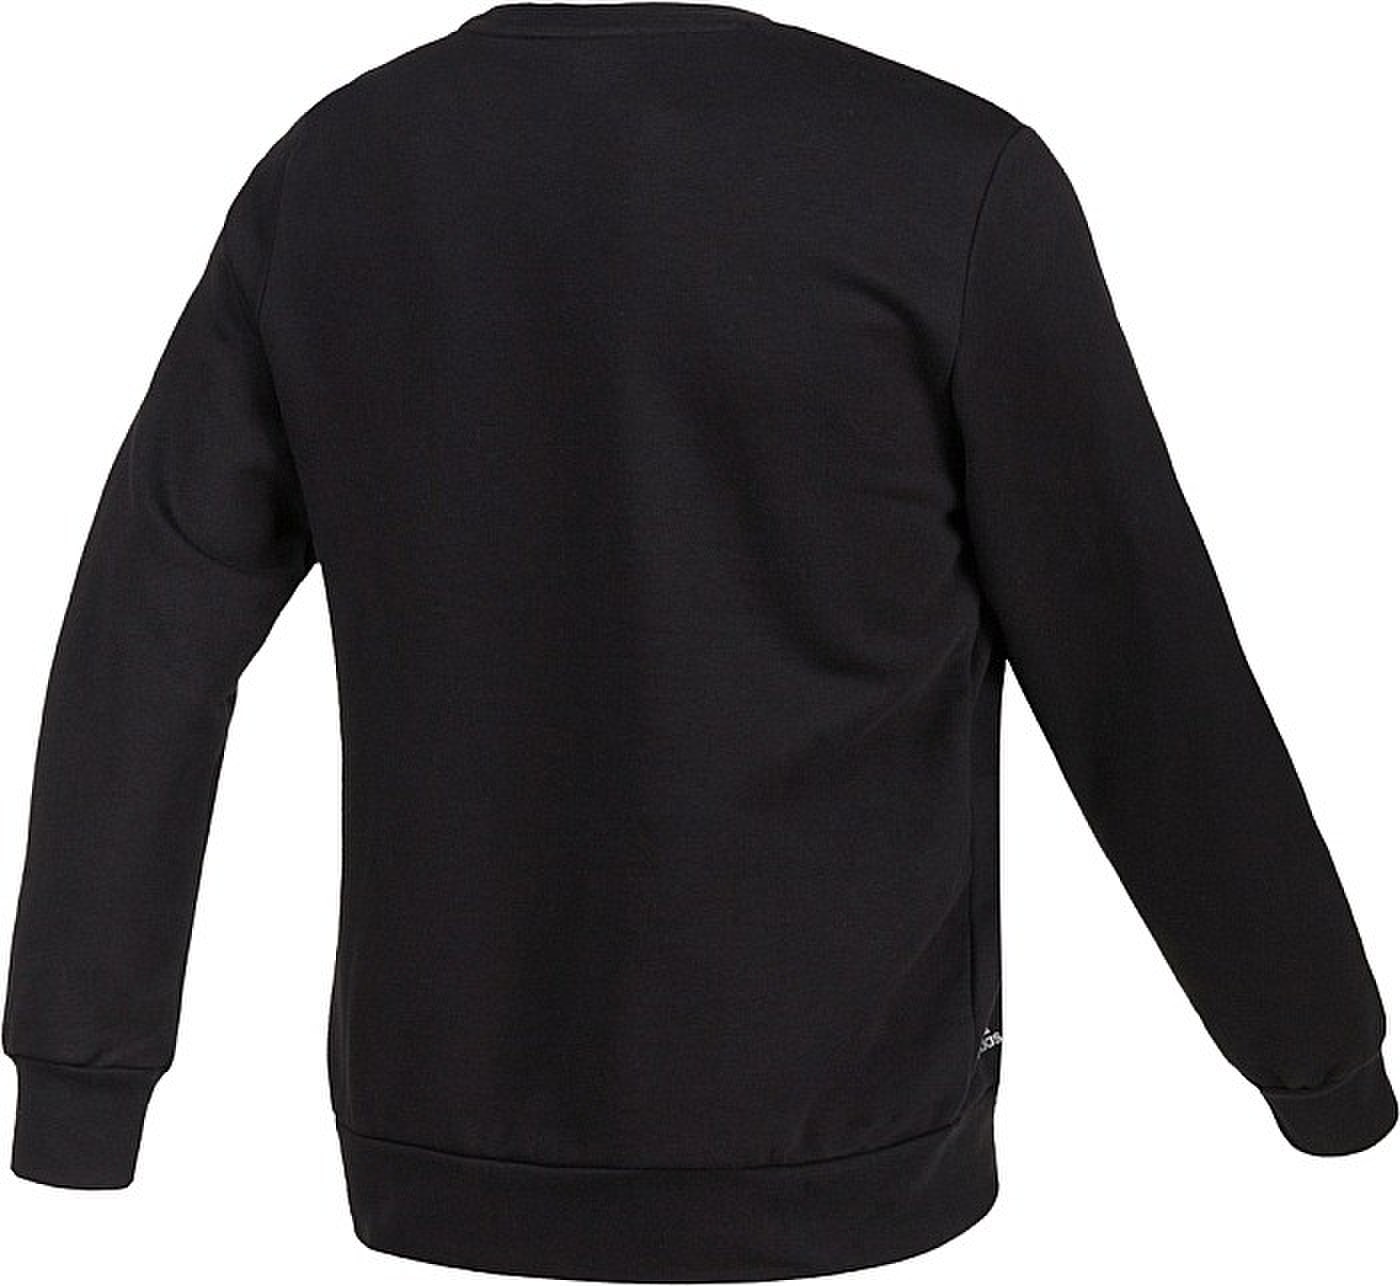 13-14 Germany Black Long Sleeve Crew Sweatshirt - Click Image to Close